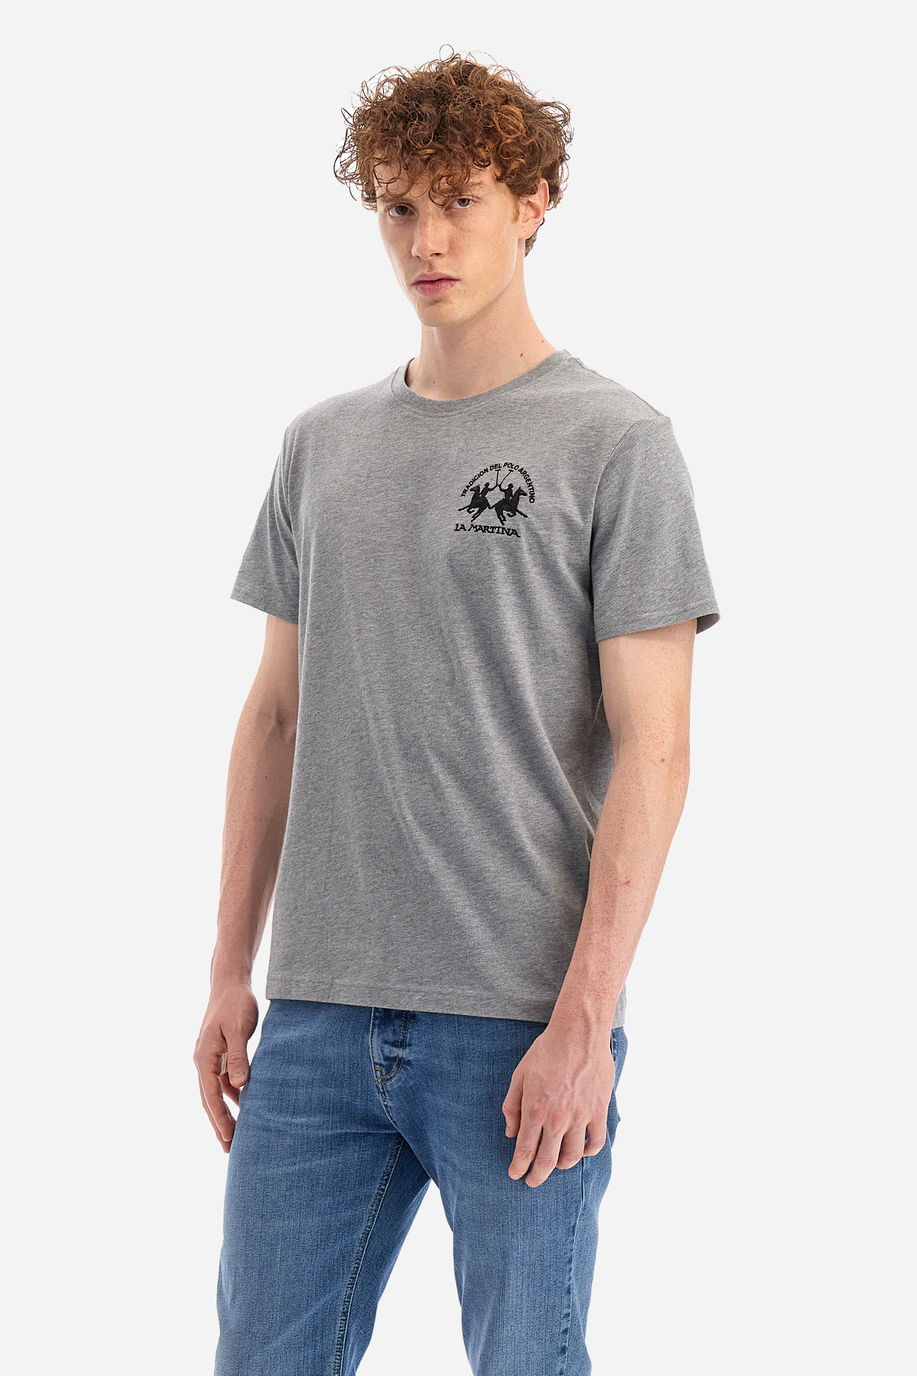 T-shirts uomo regular fit - Wandie - Regali monogrammati per lui | La Martina - Official Online Shop